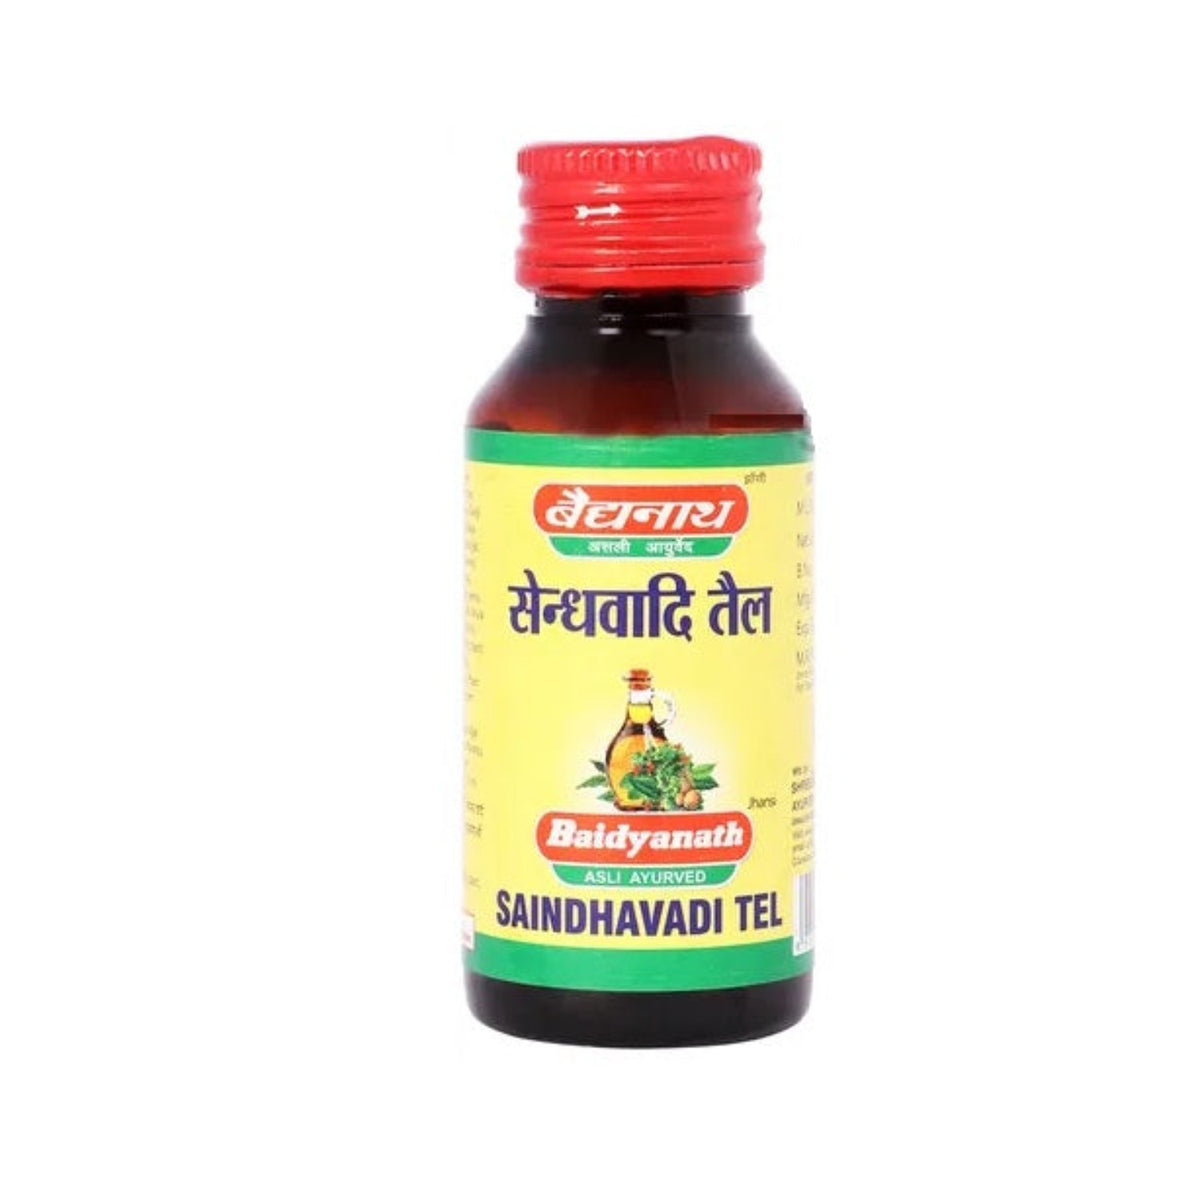 Baidyanath Ayurvedic (Jhansi) Saindhavadi Tel Oil 50ml